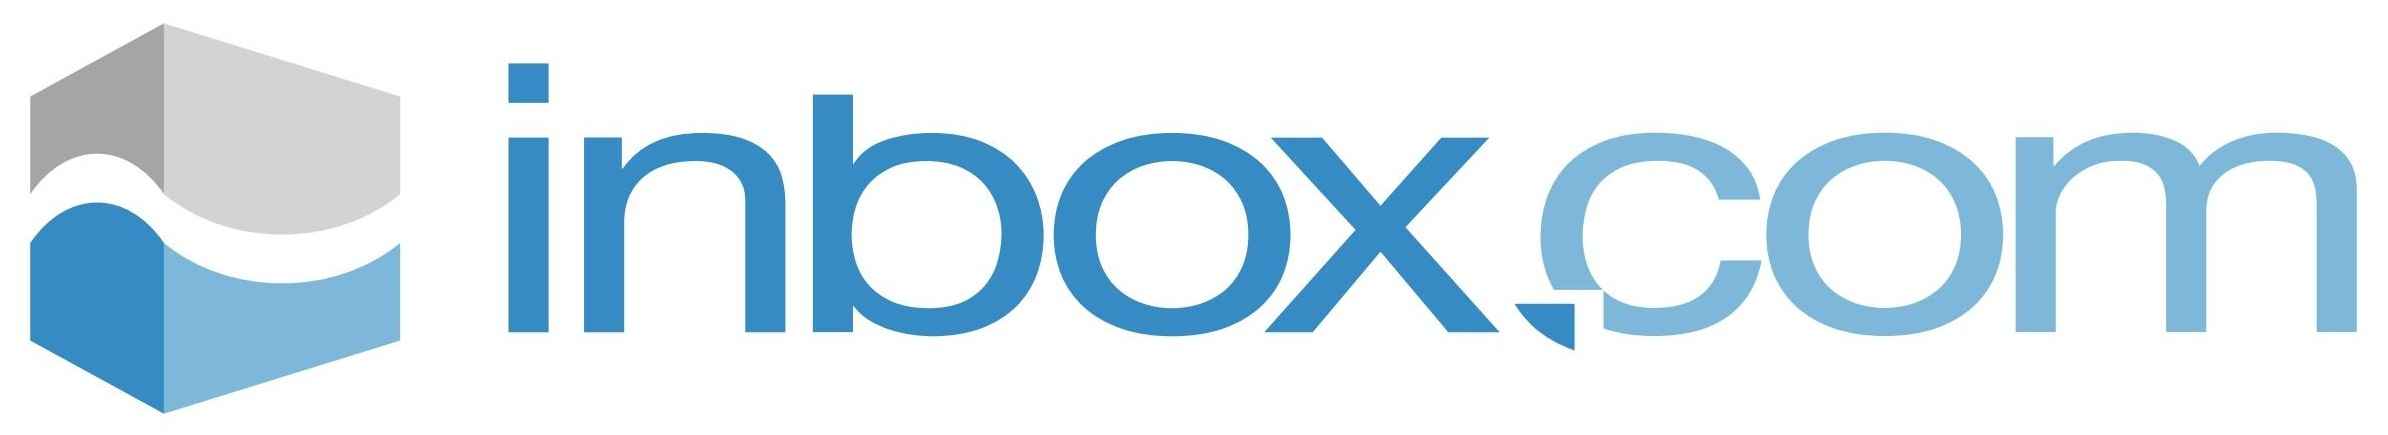 Inbox com. Инбокс. Inbox. Inbox logo.